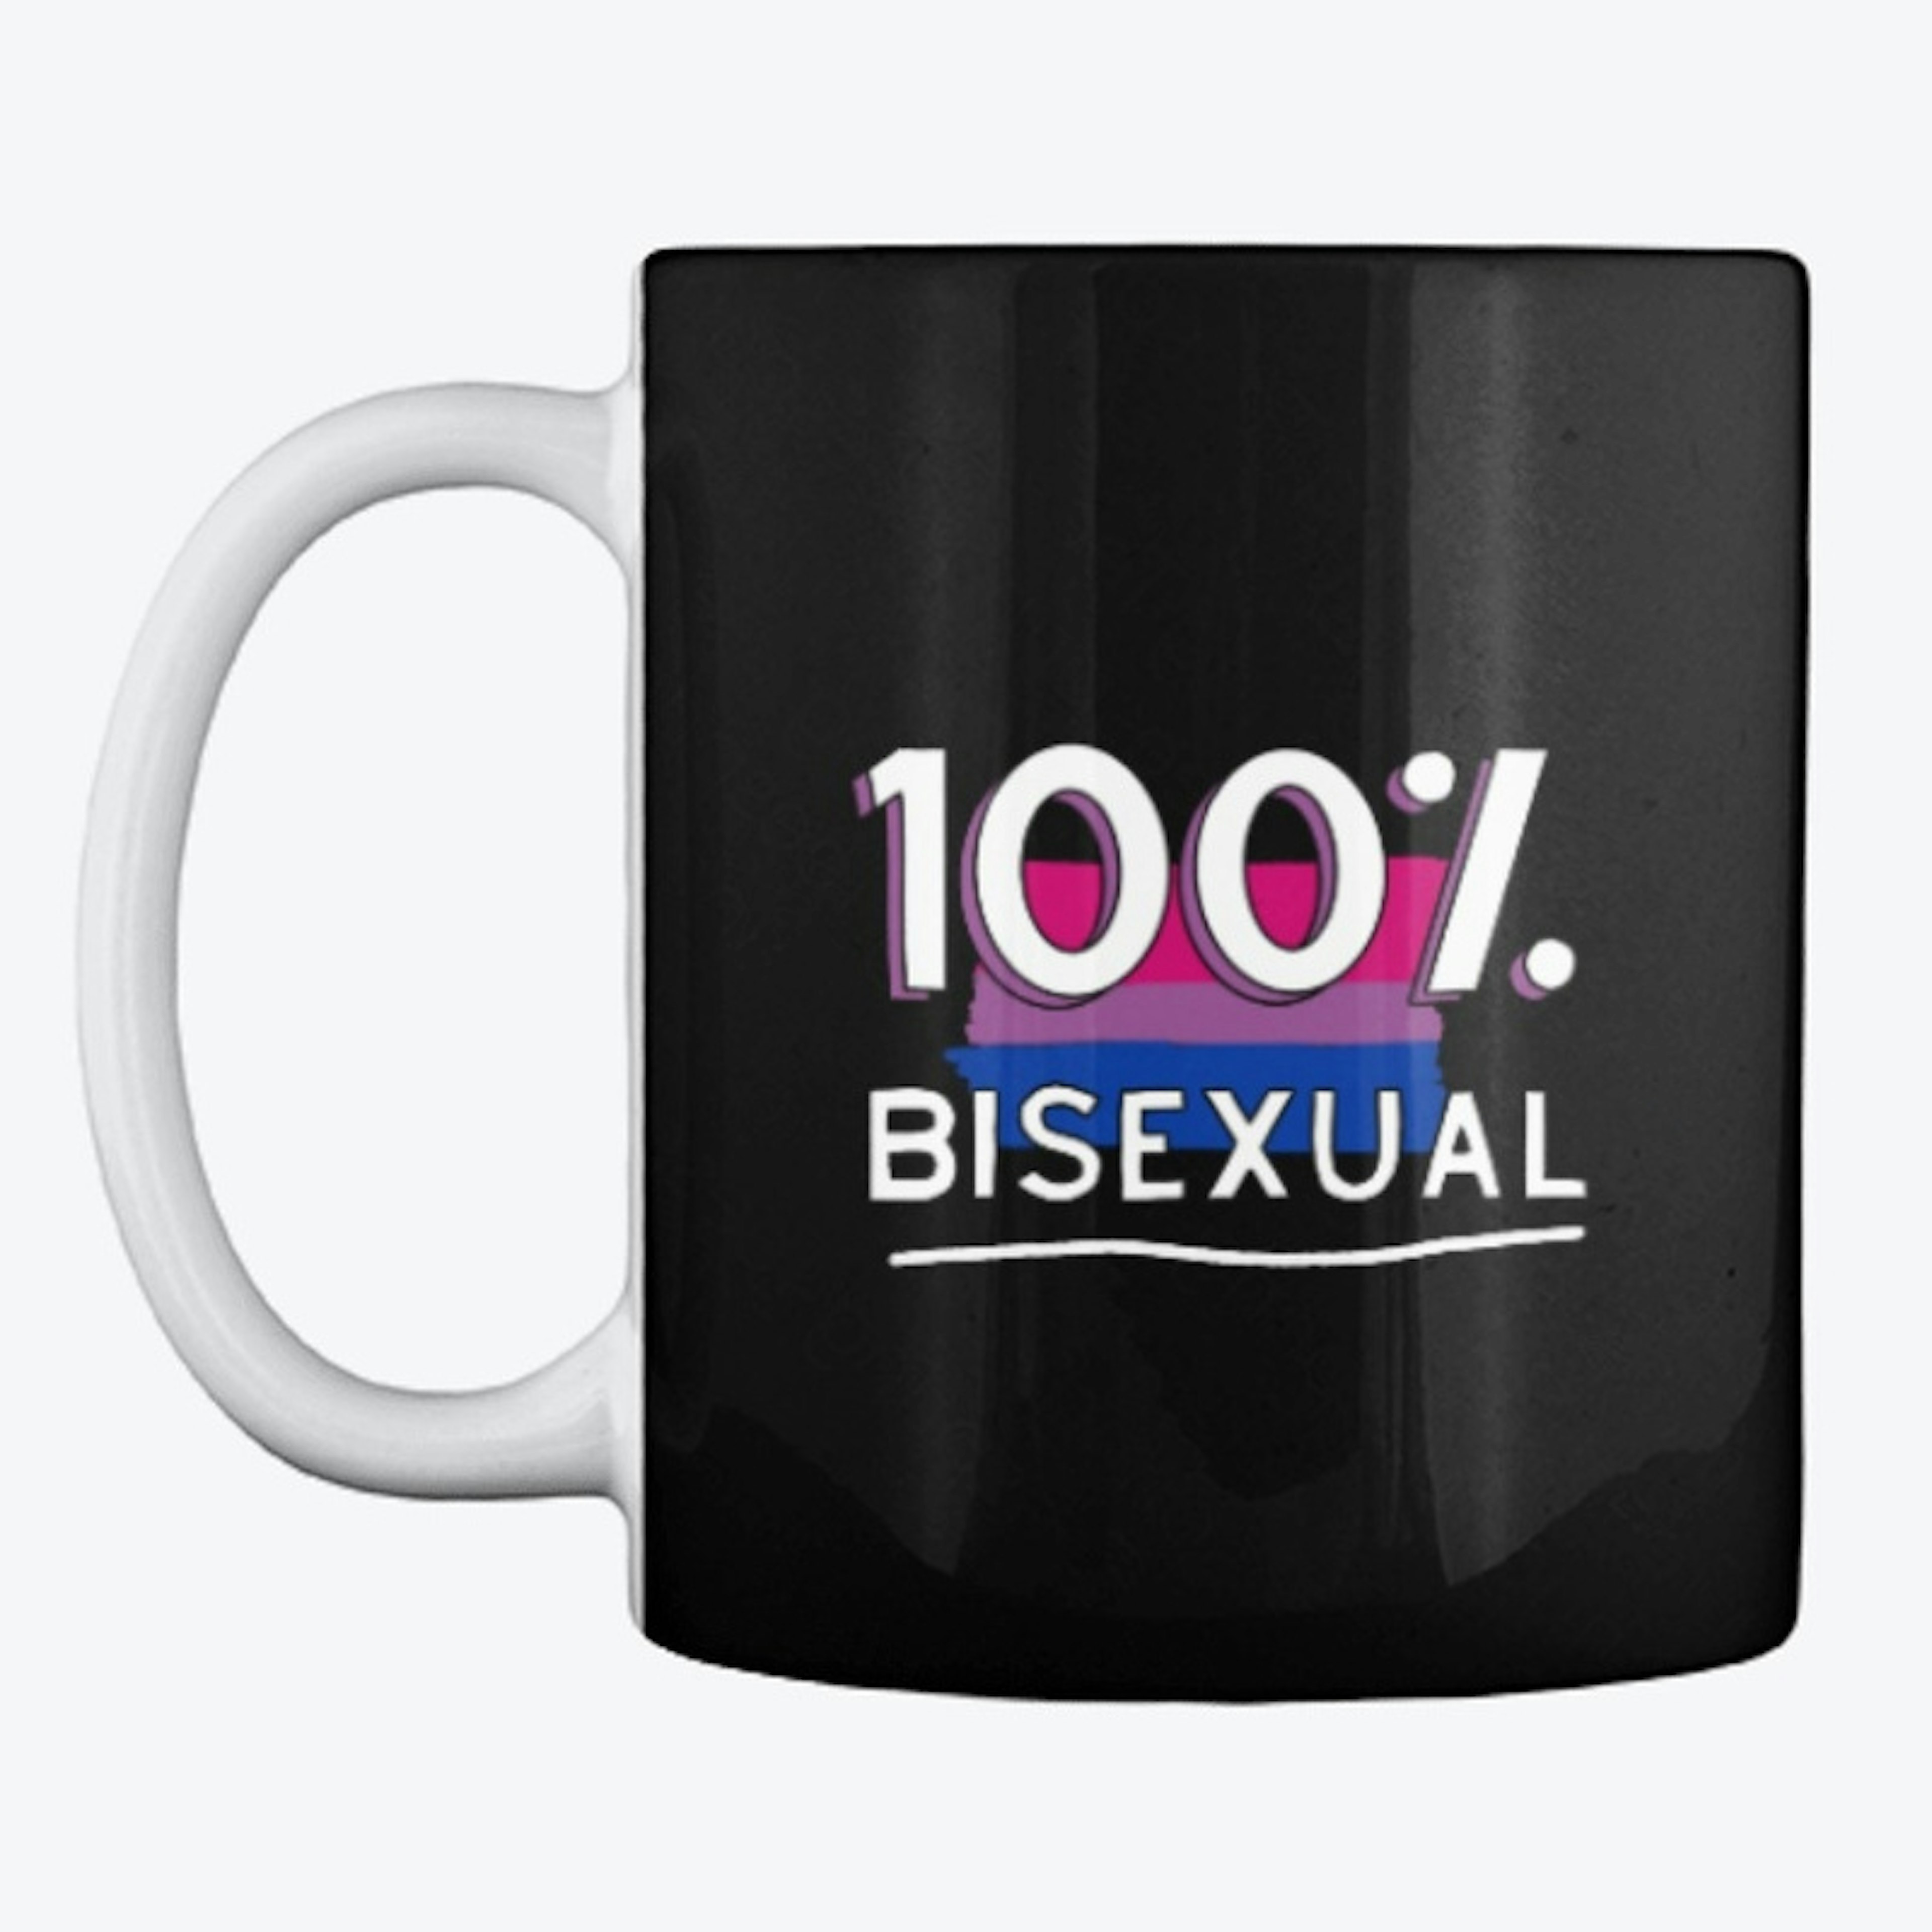 100% Bisexual